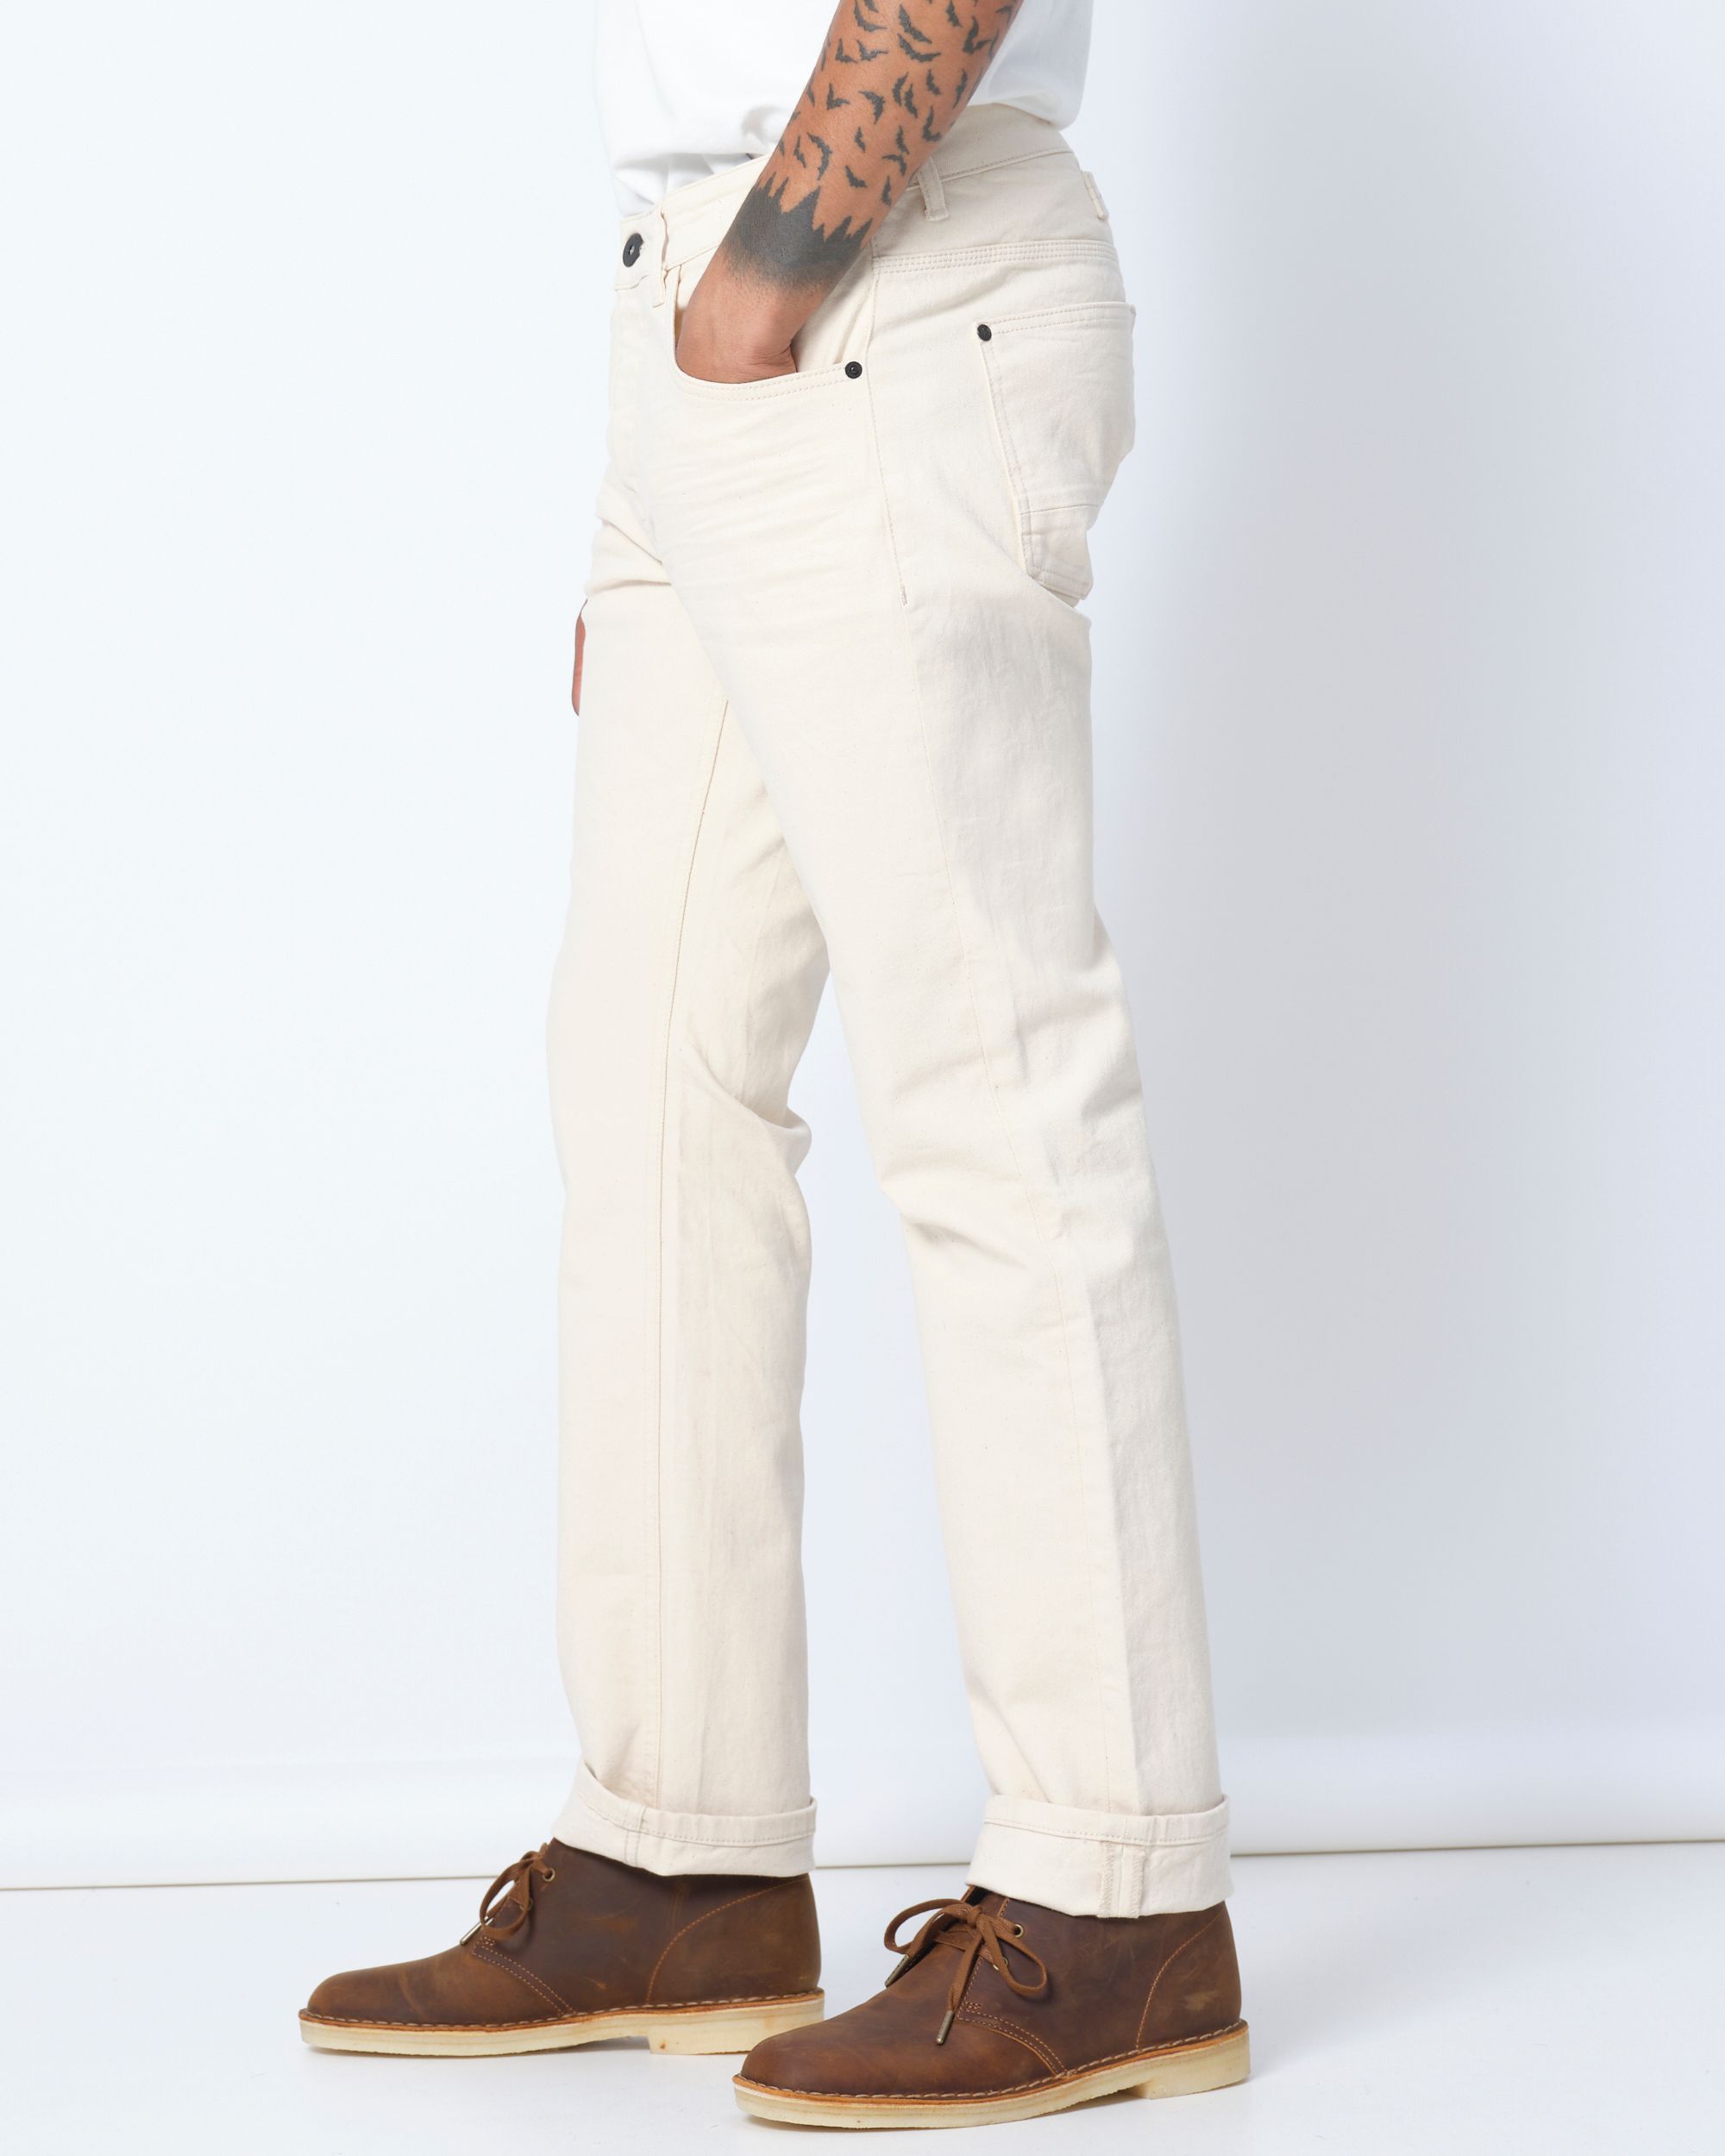 J.C. RAGS Jethro Jeans Off White uni 075279-001-28/32